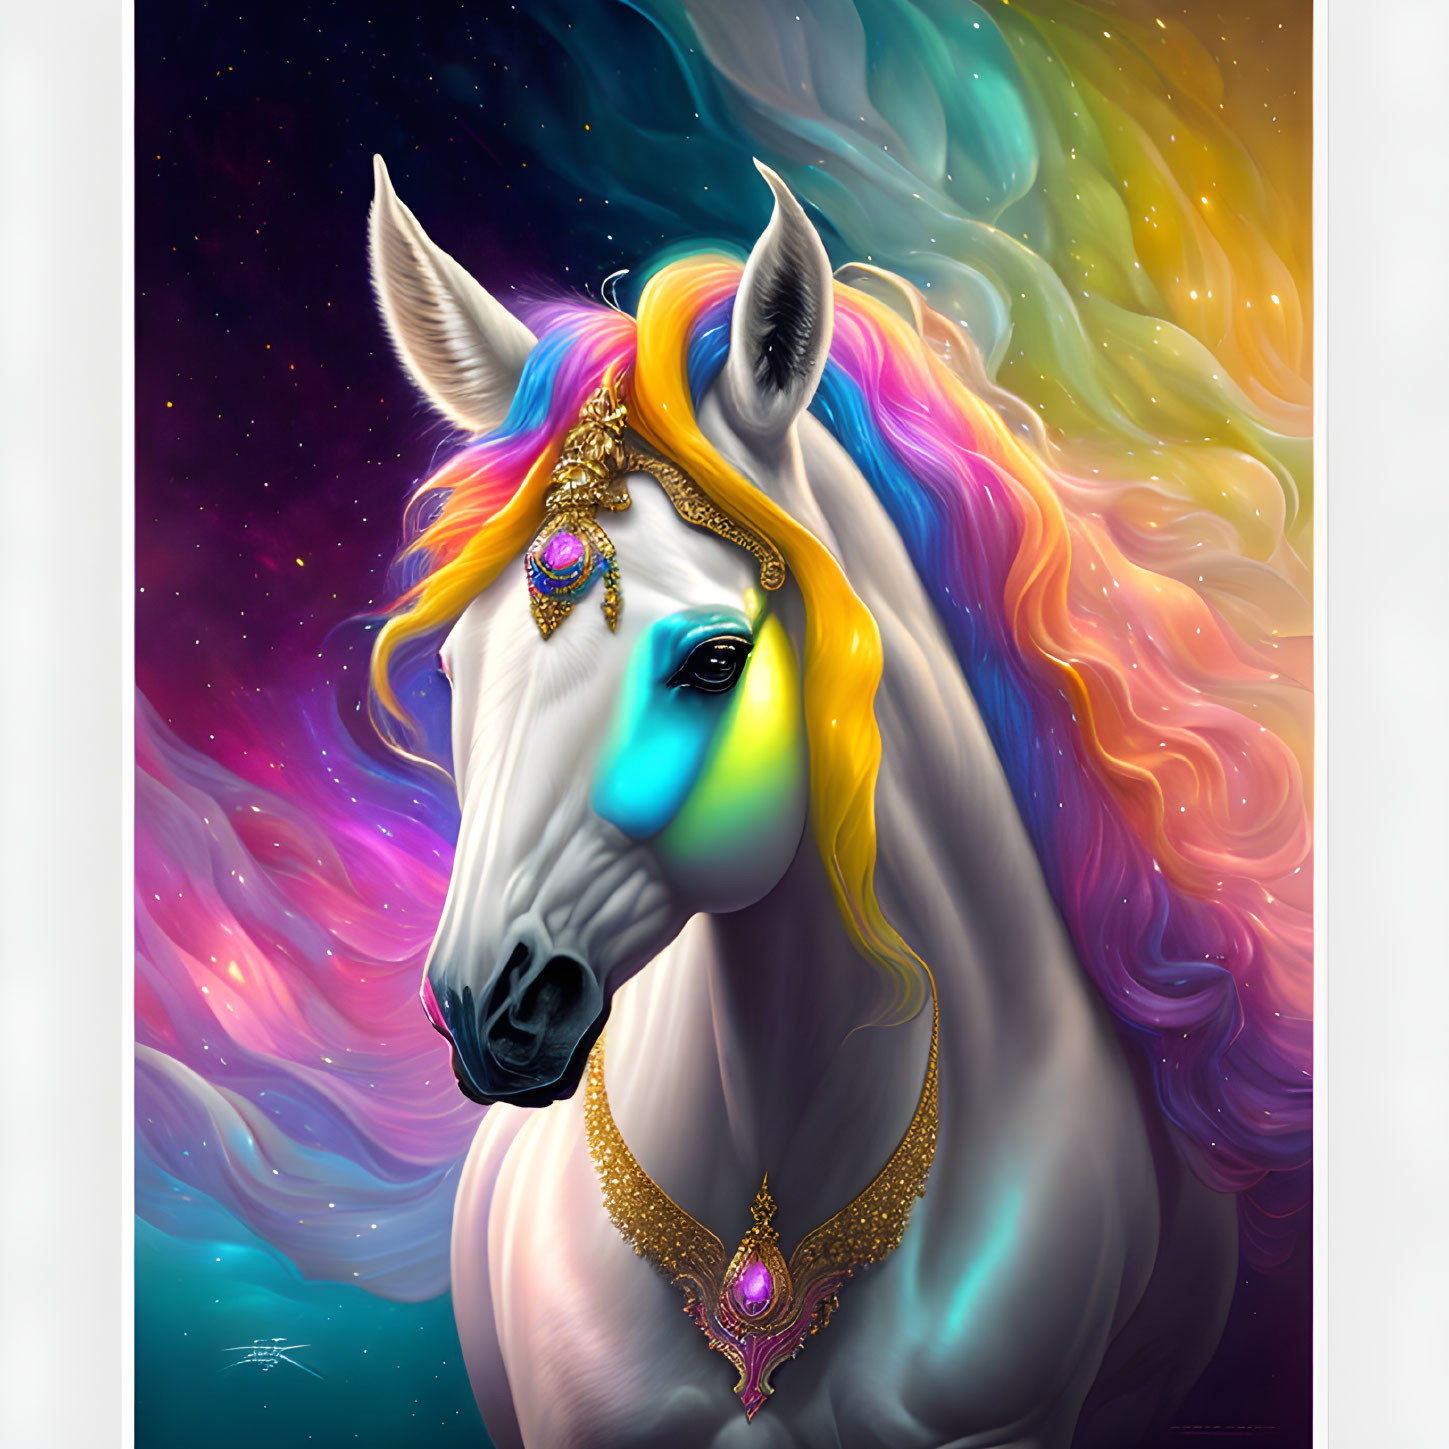 Majestic unicorn with rainbow mane in cosmic scene